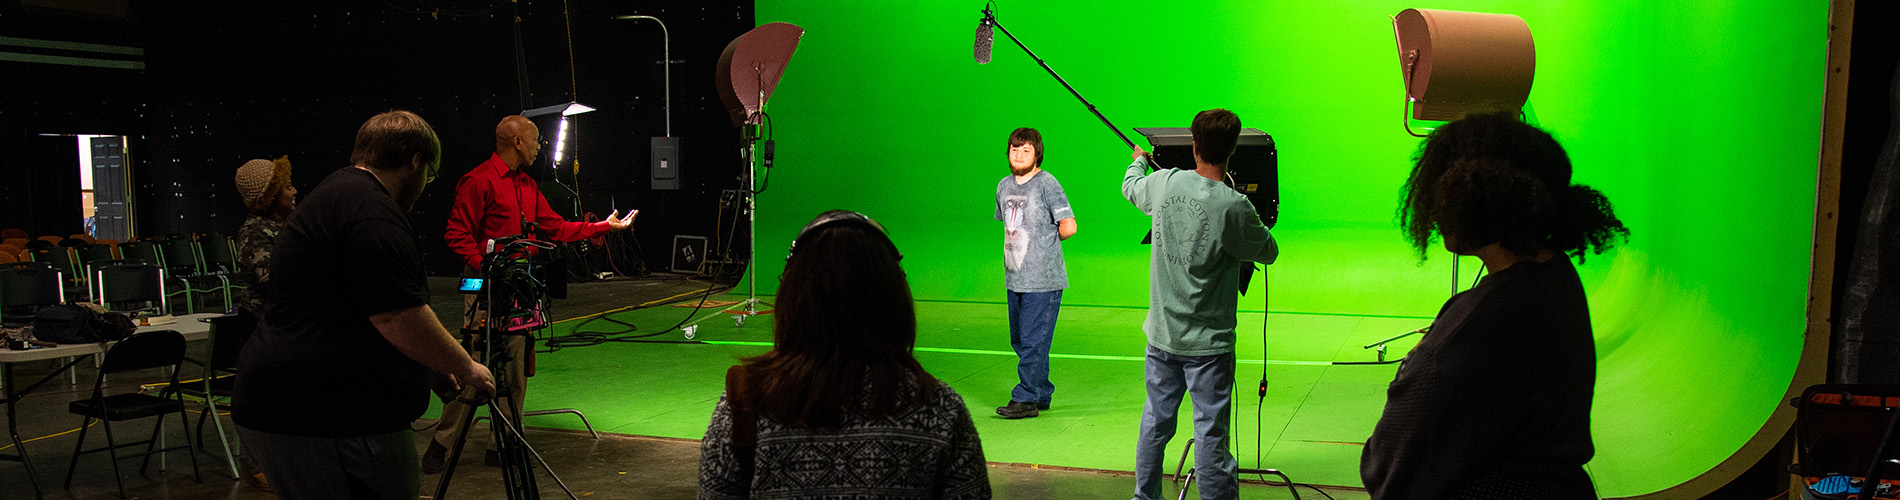 Green screen filming at longleaf studios 